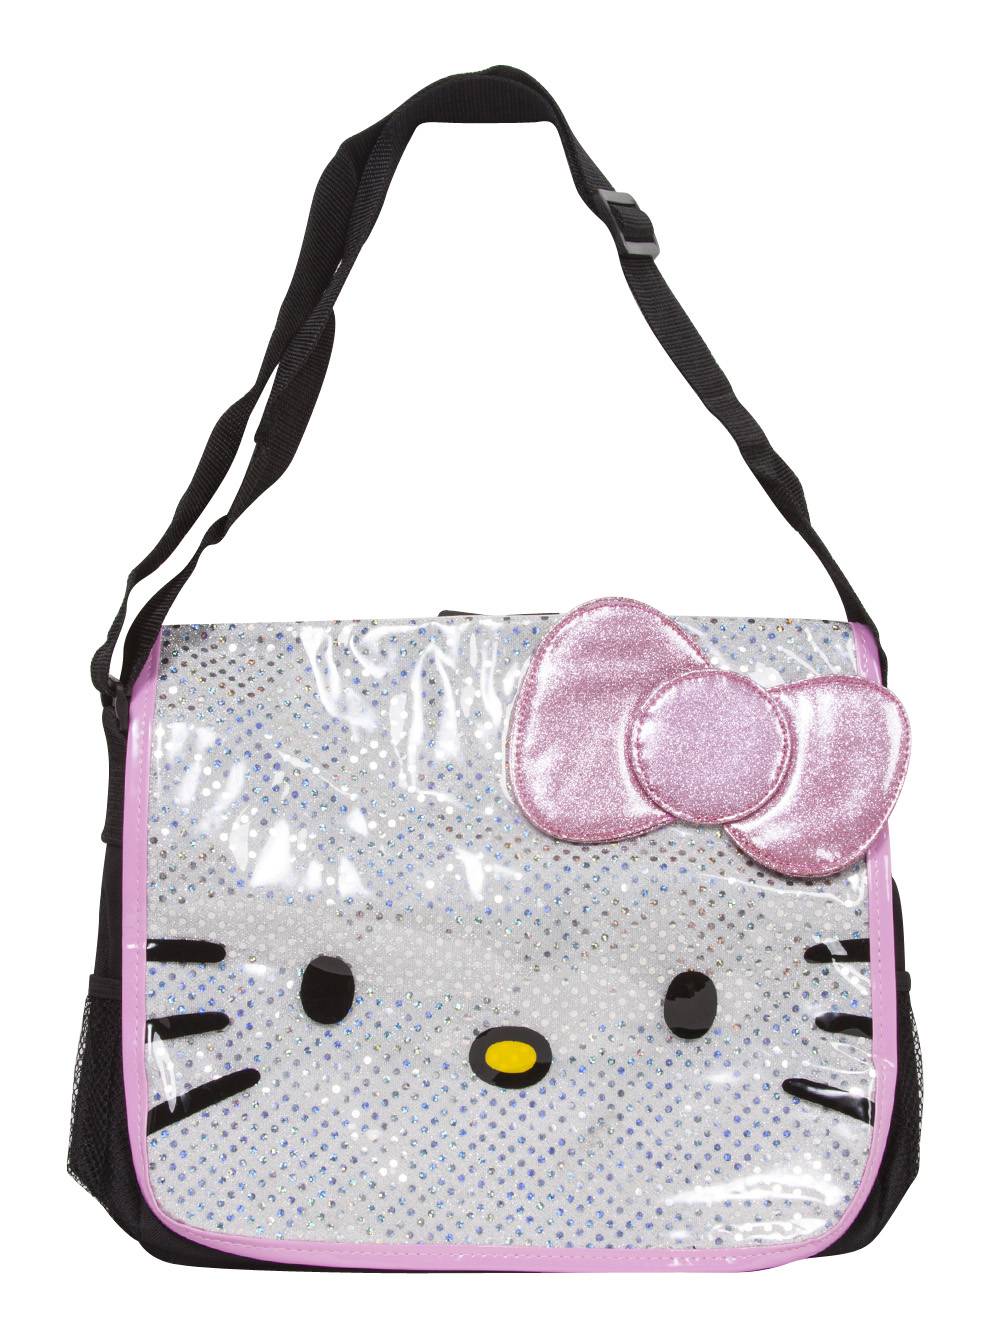 Sanrio Hello Kitty White and Pink Glitter Messenger Bag - Walmart.com ...